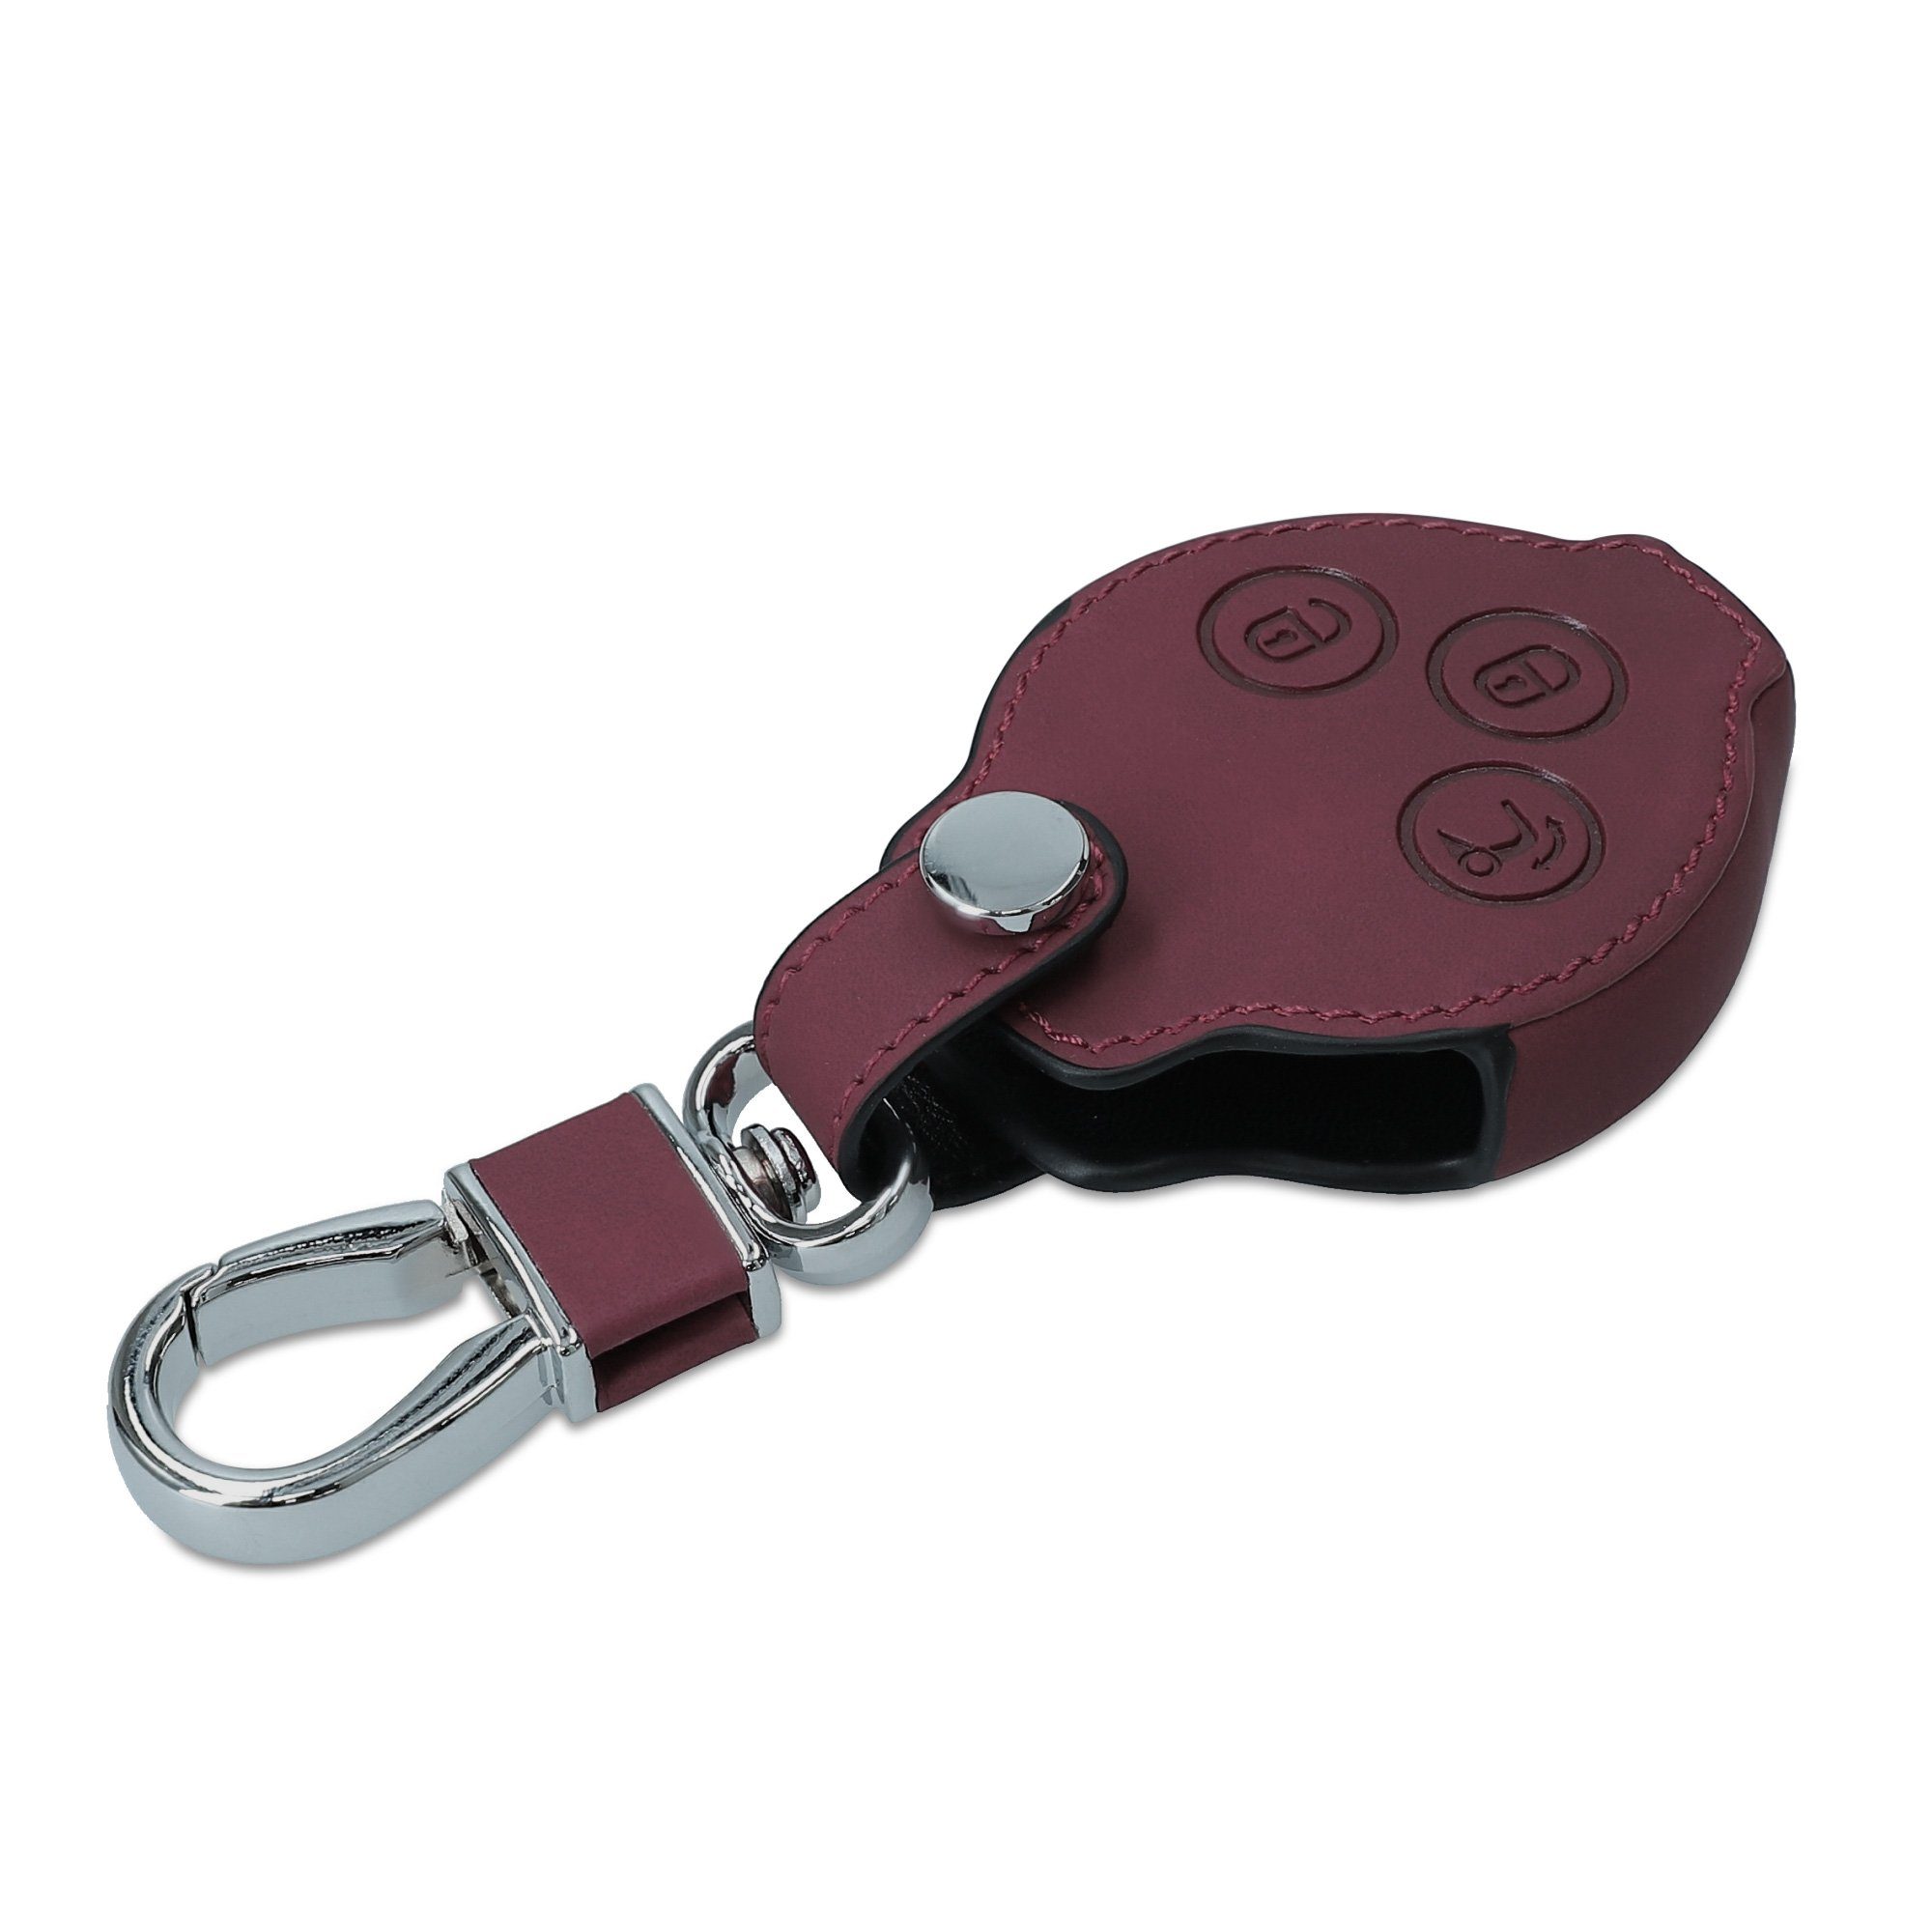 kwmobile Schlüsseltasche, Autoschlüssel Hülle für Smart - Nubuklederoptik -  Kunstleder Schutzhülle Schlüsselhülle Cover für Smart 3-Tasten Funk  Autoschlüssel - Kompass Vintage Design